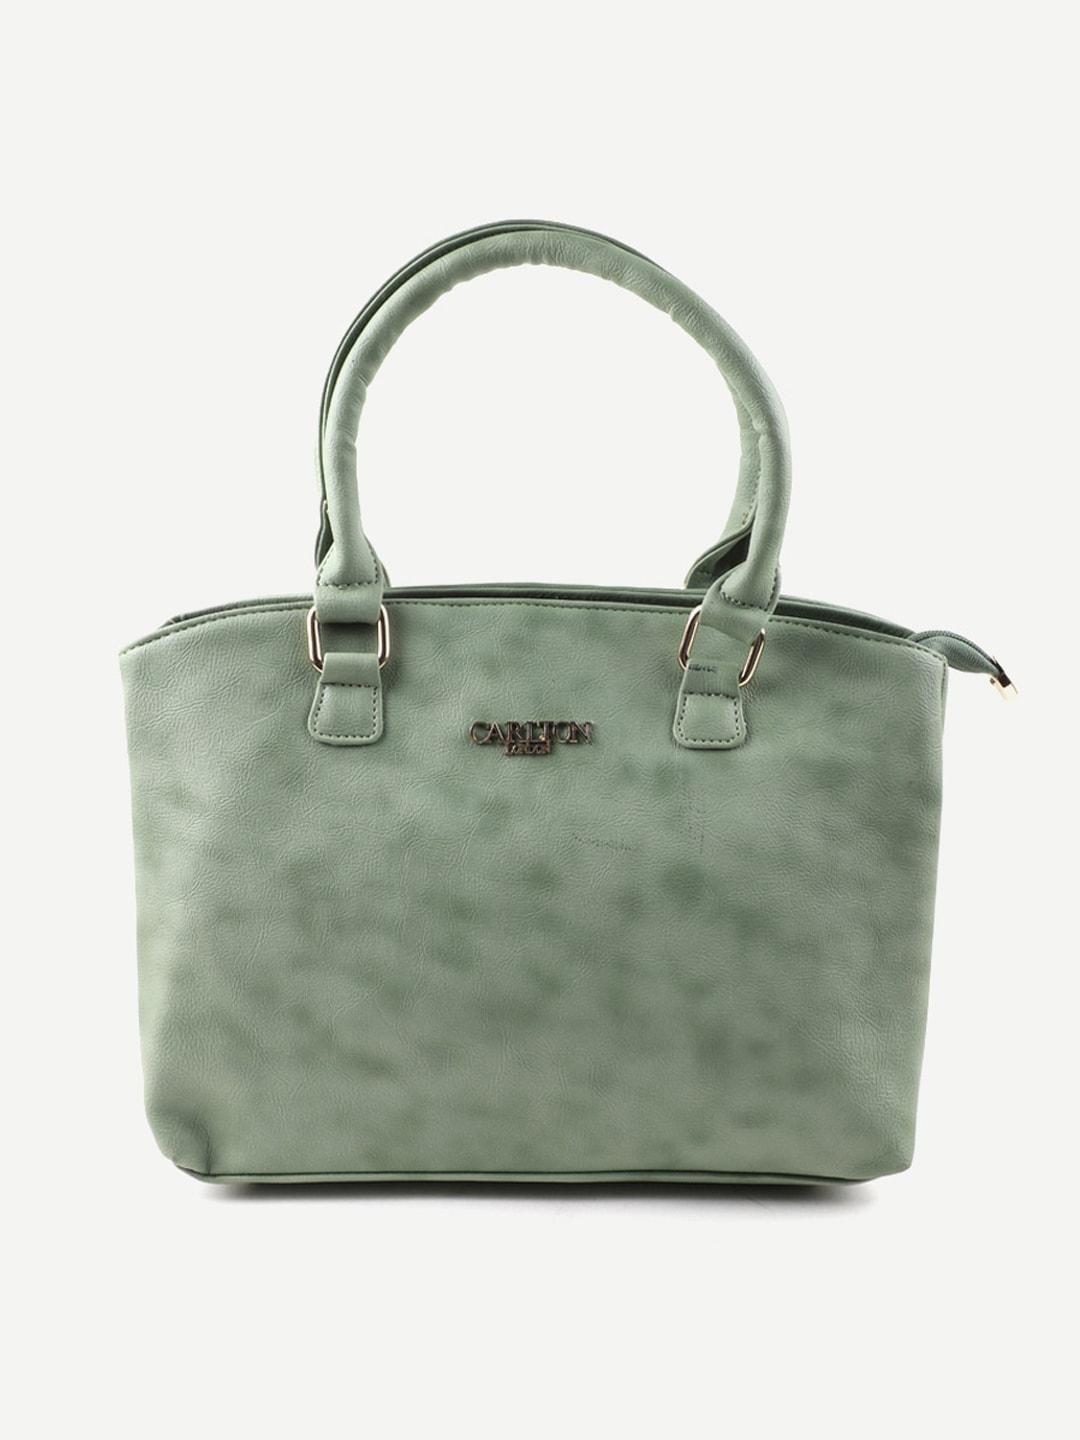 Carlton London Green Textured Structured Handheld Bag